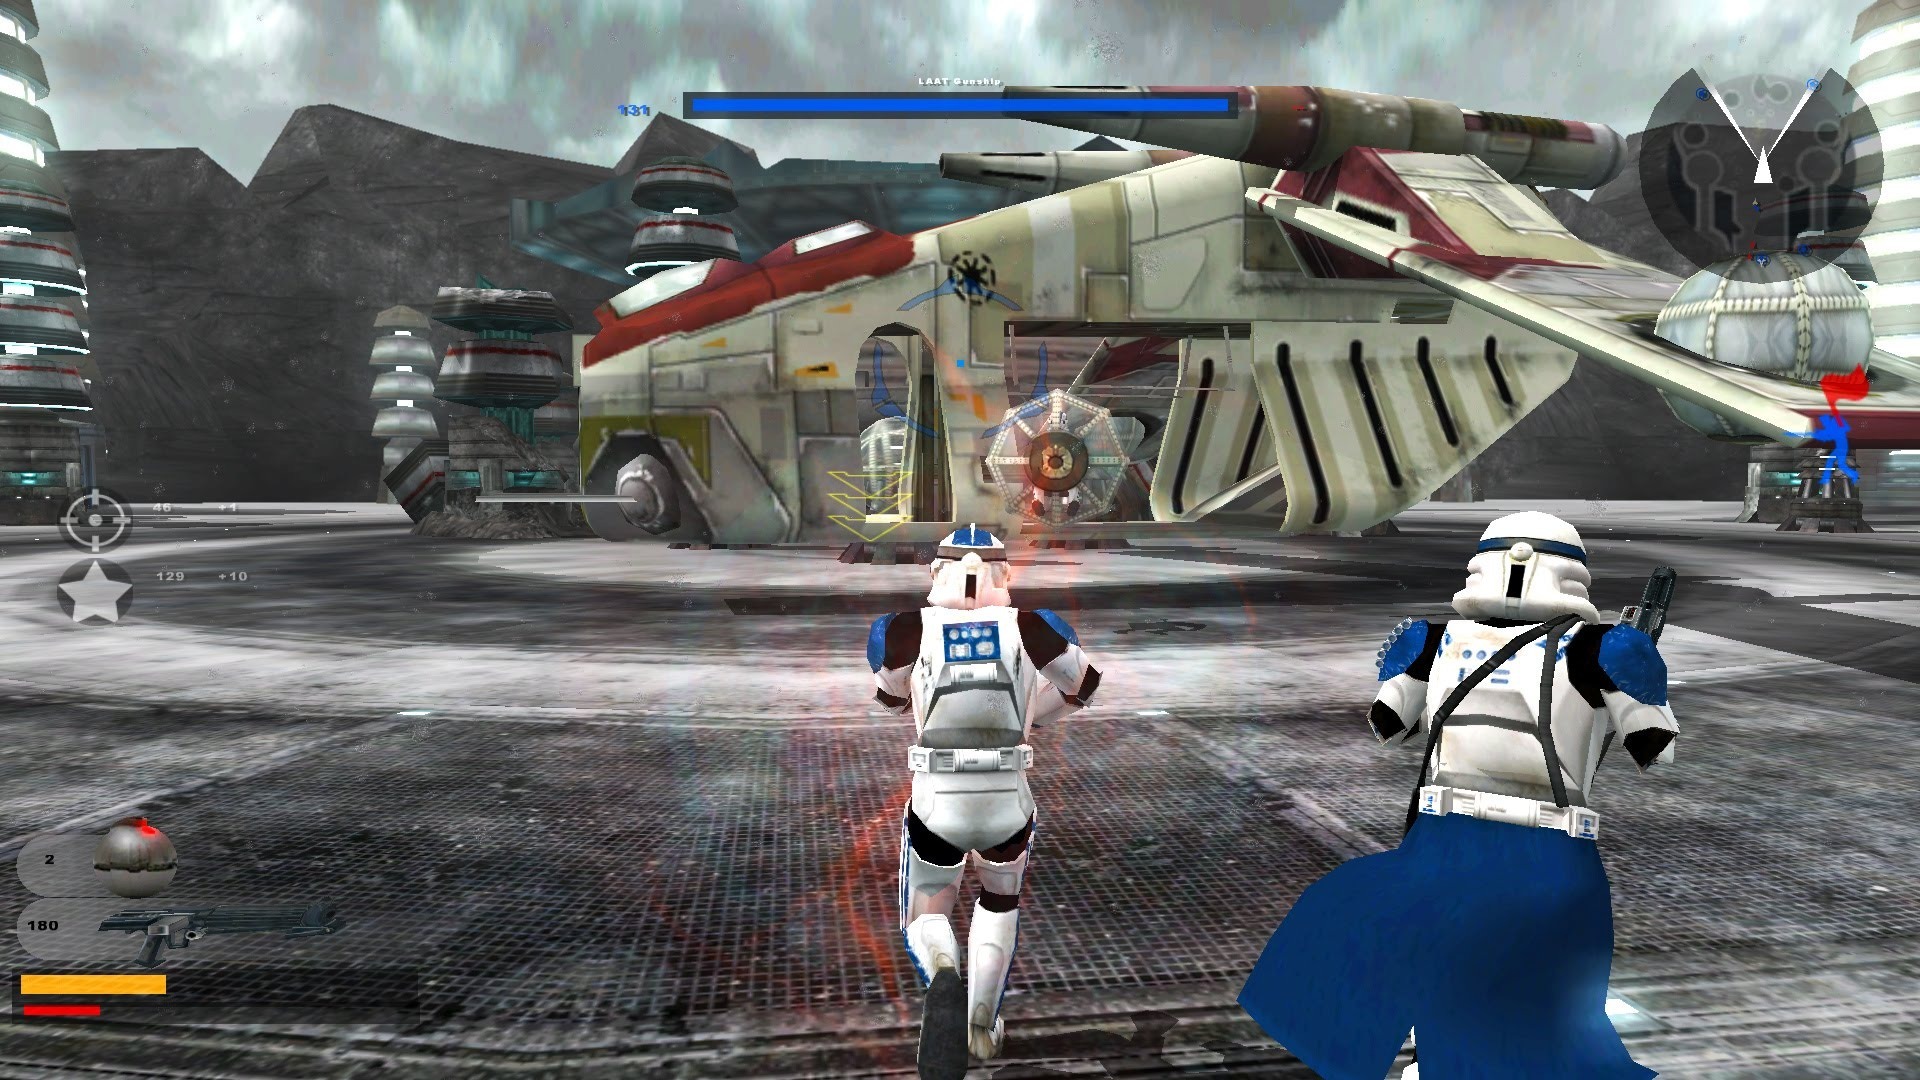 Stars 2 game. Стар ВАРС батлфронт 2. Звёздные войны батлфронт 2 2005. Стар ВАРС батлфронт 2 геймплей. Star Wars: Battlefront (игра, 2005).